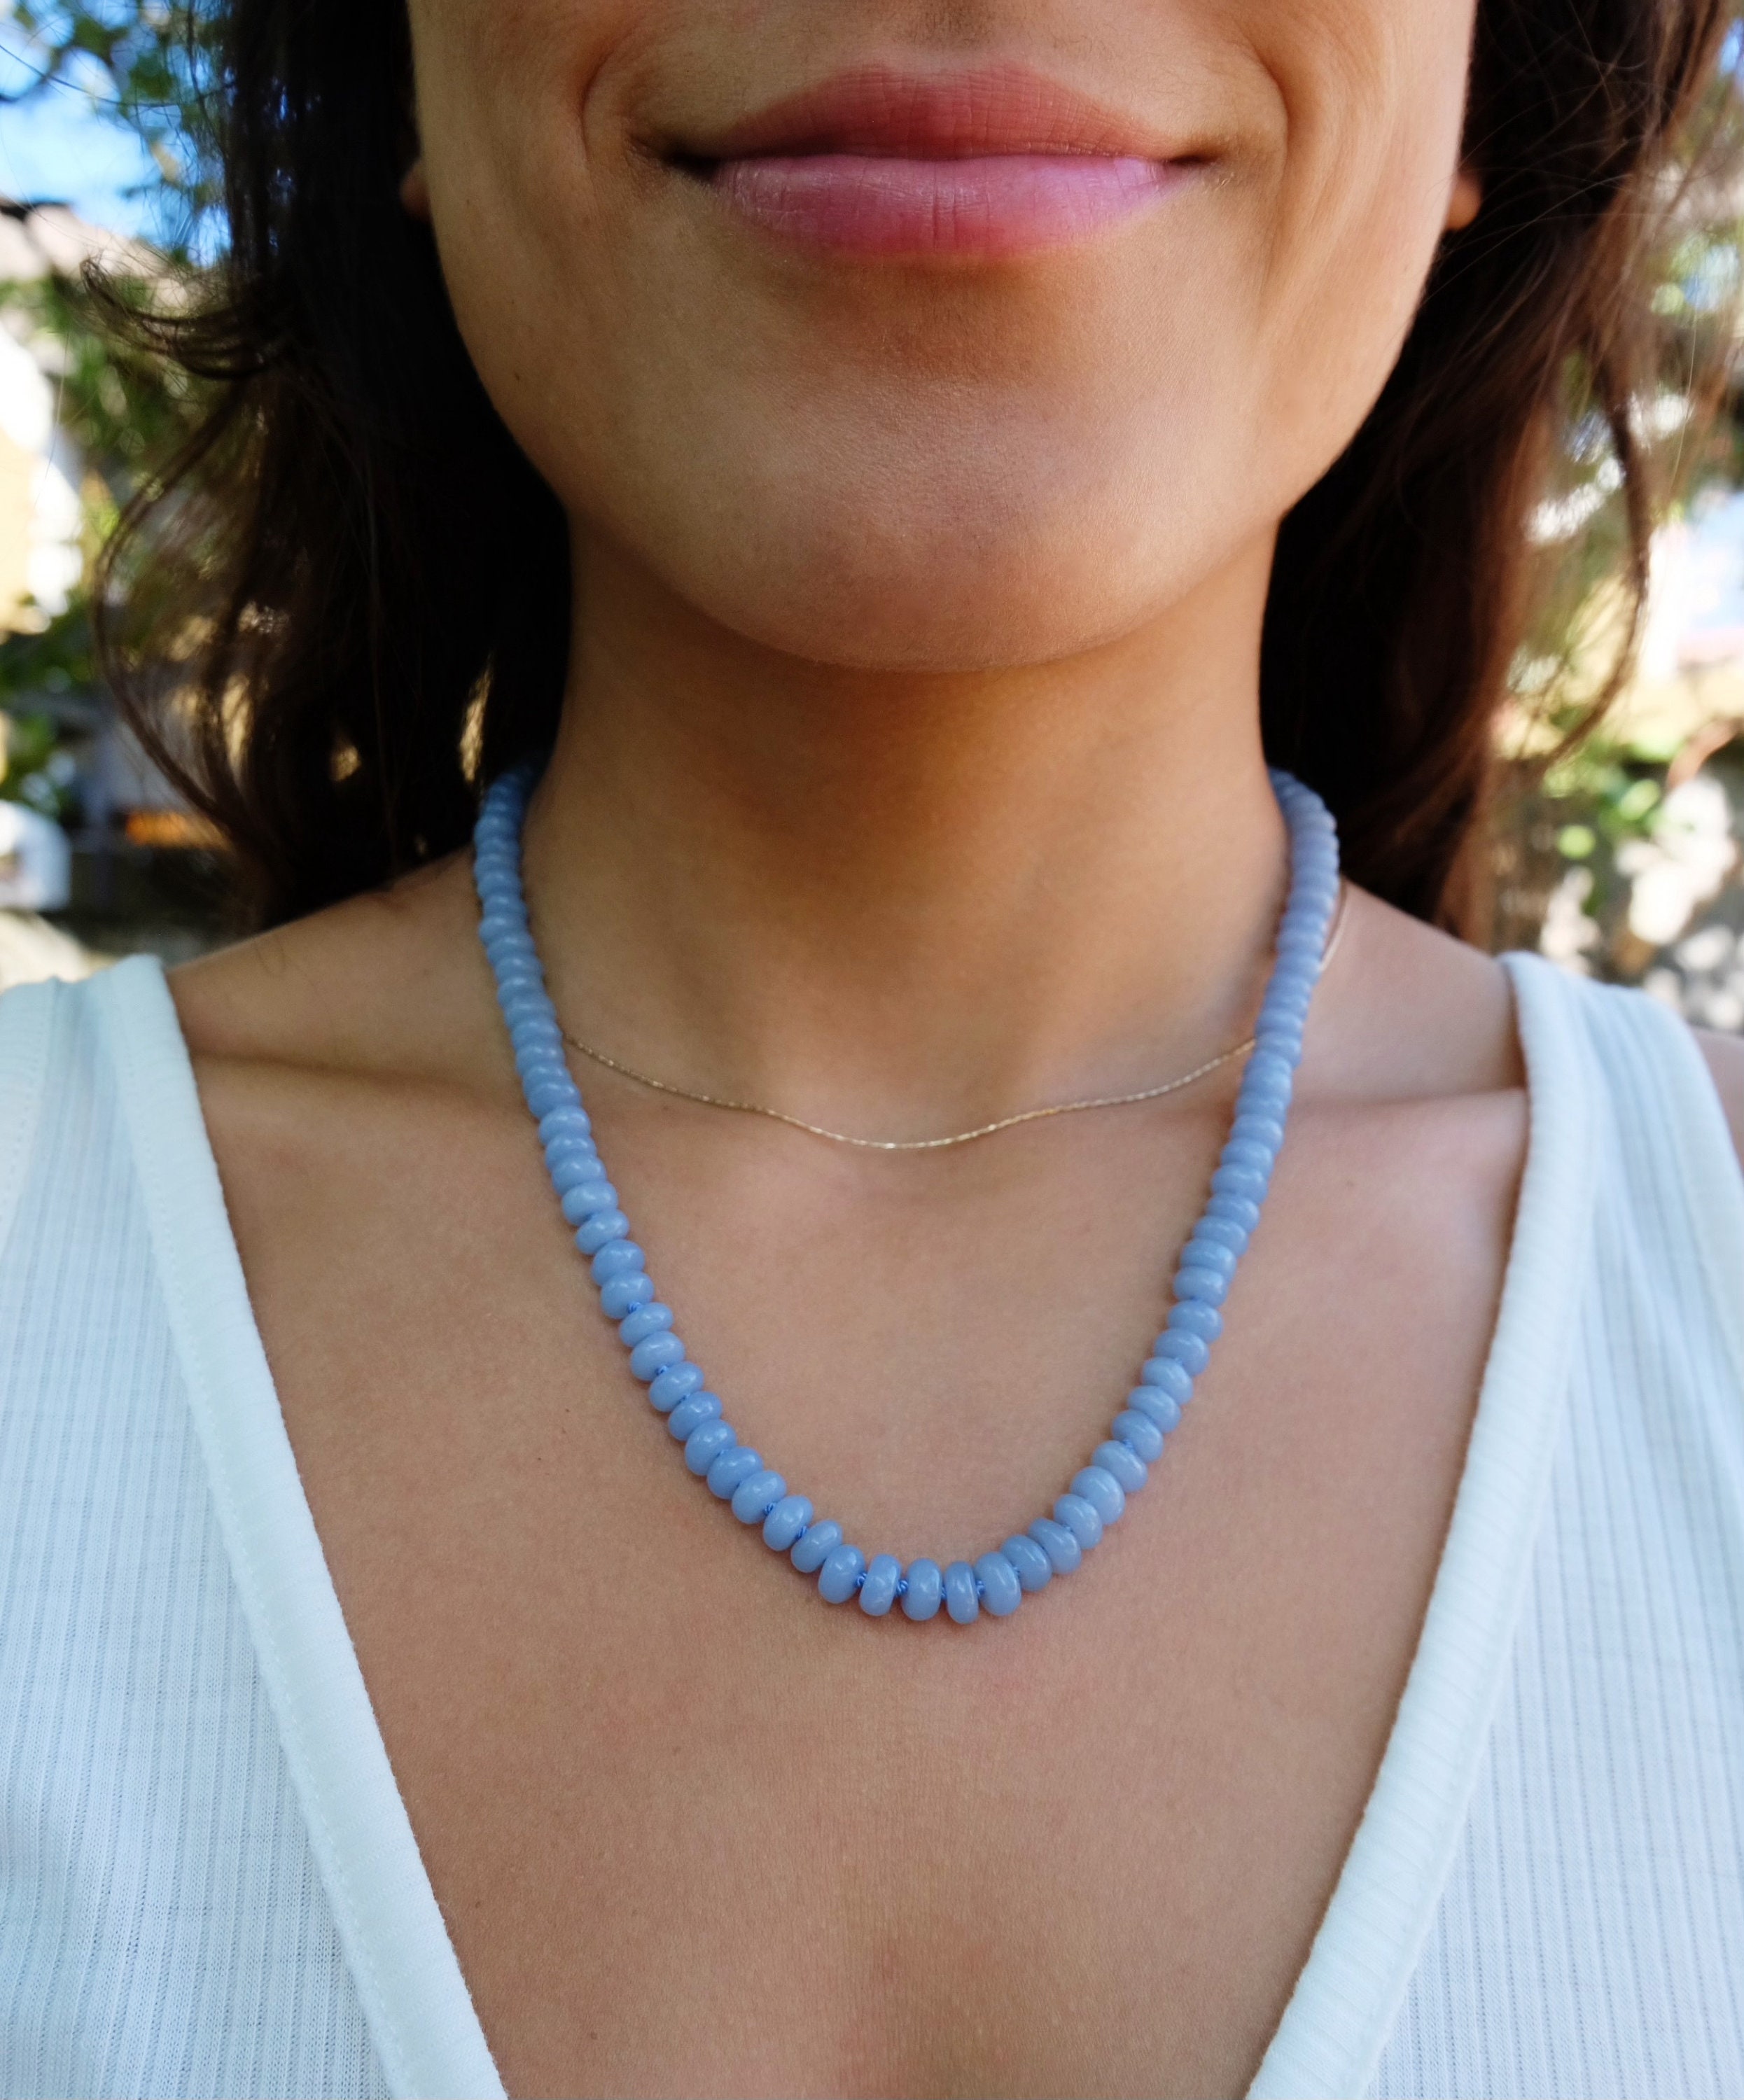 Beaded Candy Necklace - Aquamarine by Irene Neuwirth